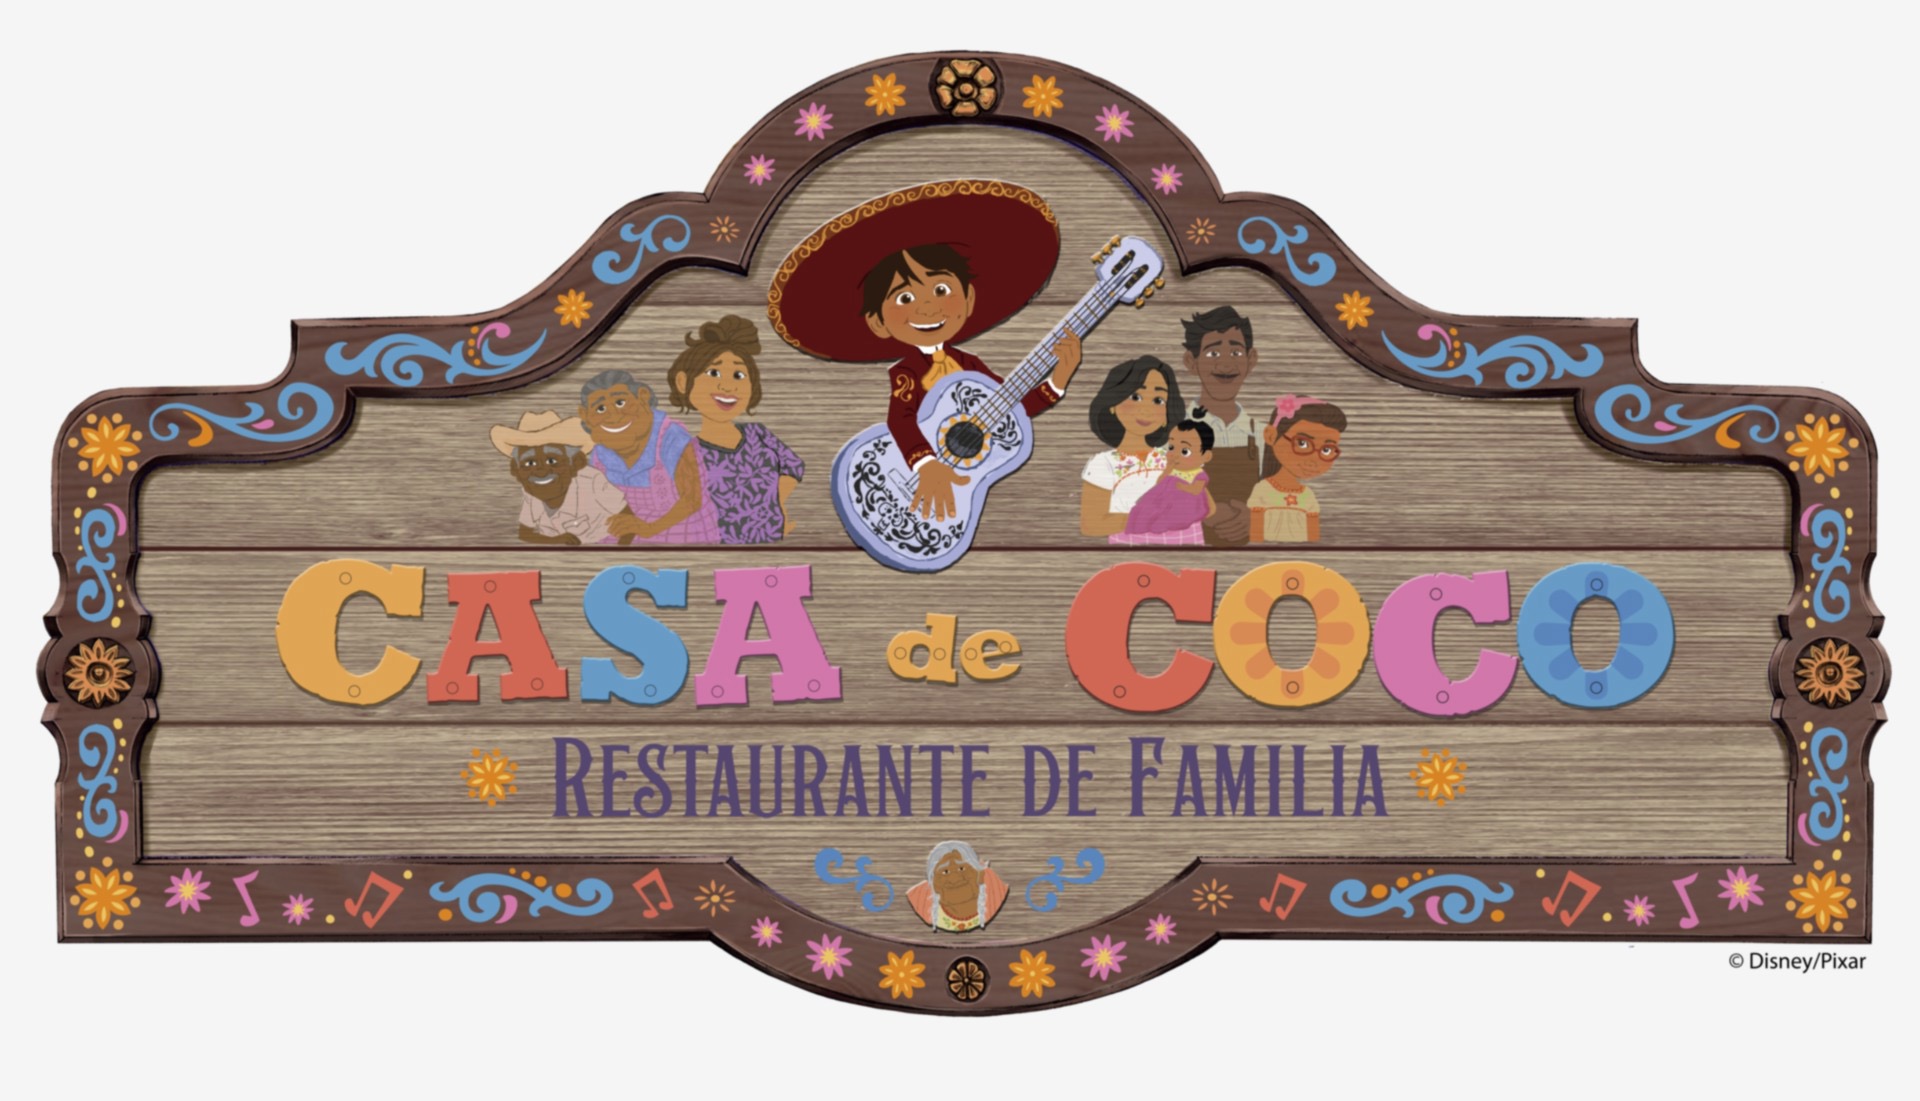 Fuente Del Oro Restaurant will be renamed and rethemed to “Casa de Coco – Restaurante de la Familia”